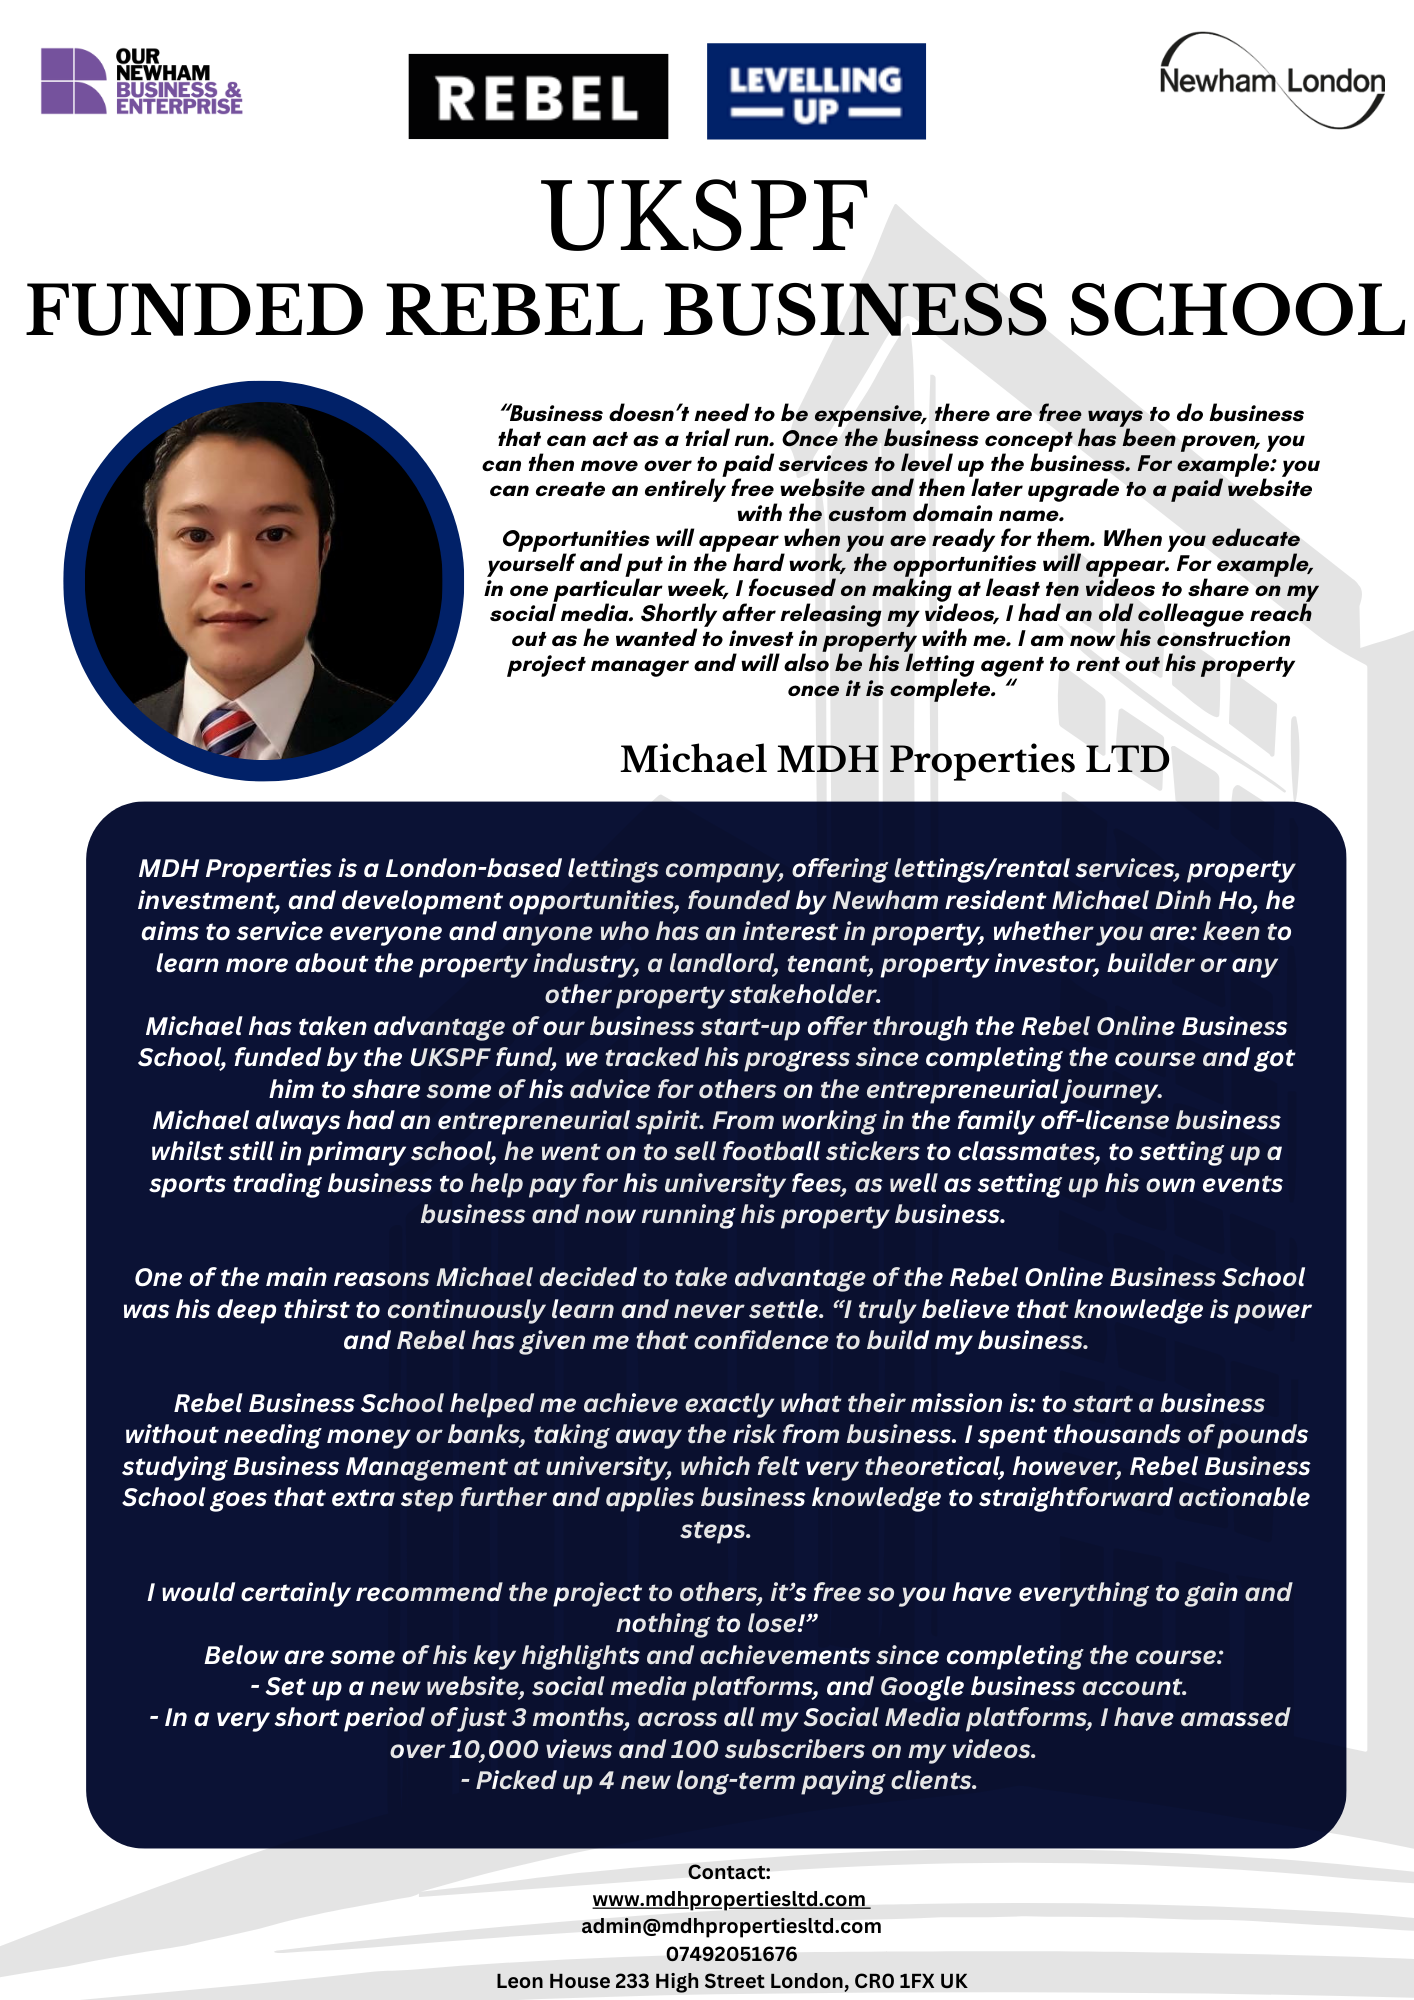 Michael Dinh Ho founder of MDH Properties Ltd Case Study